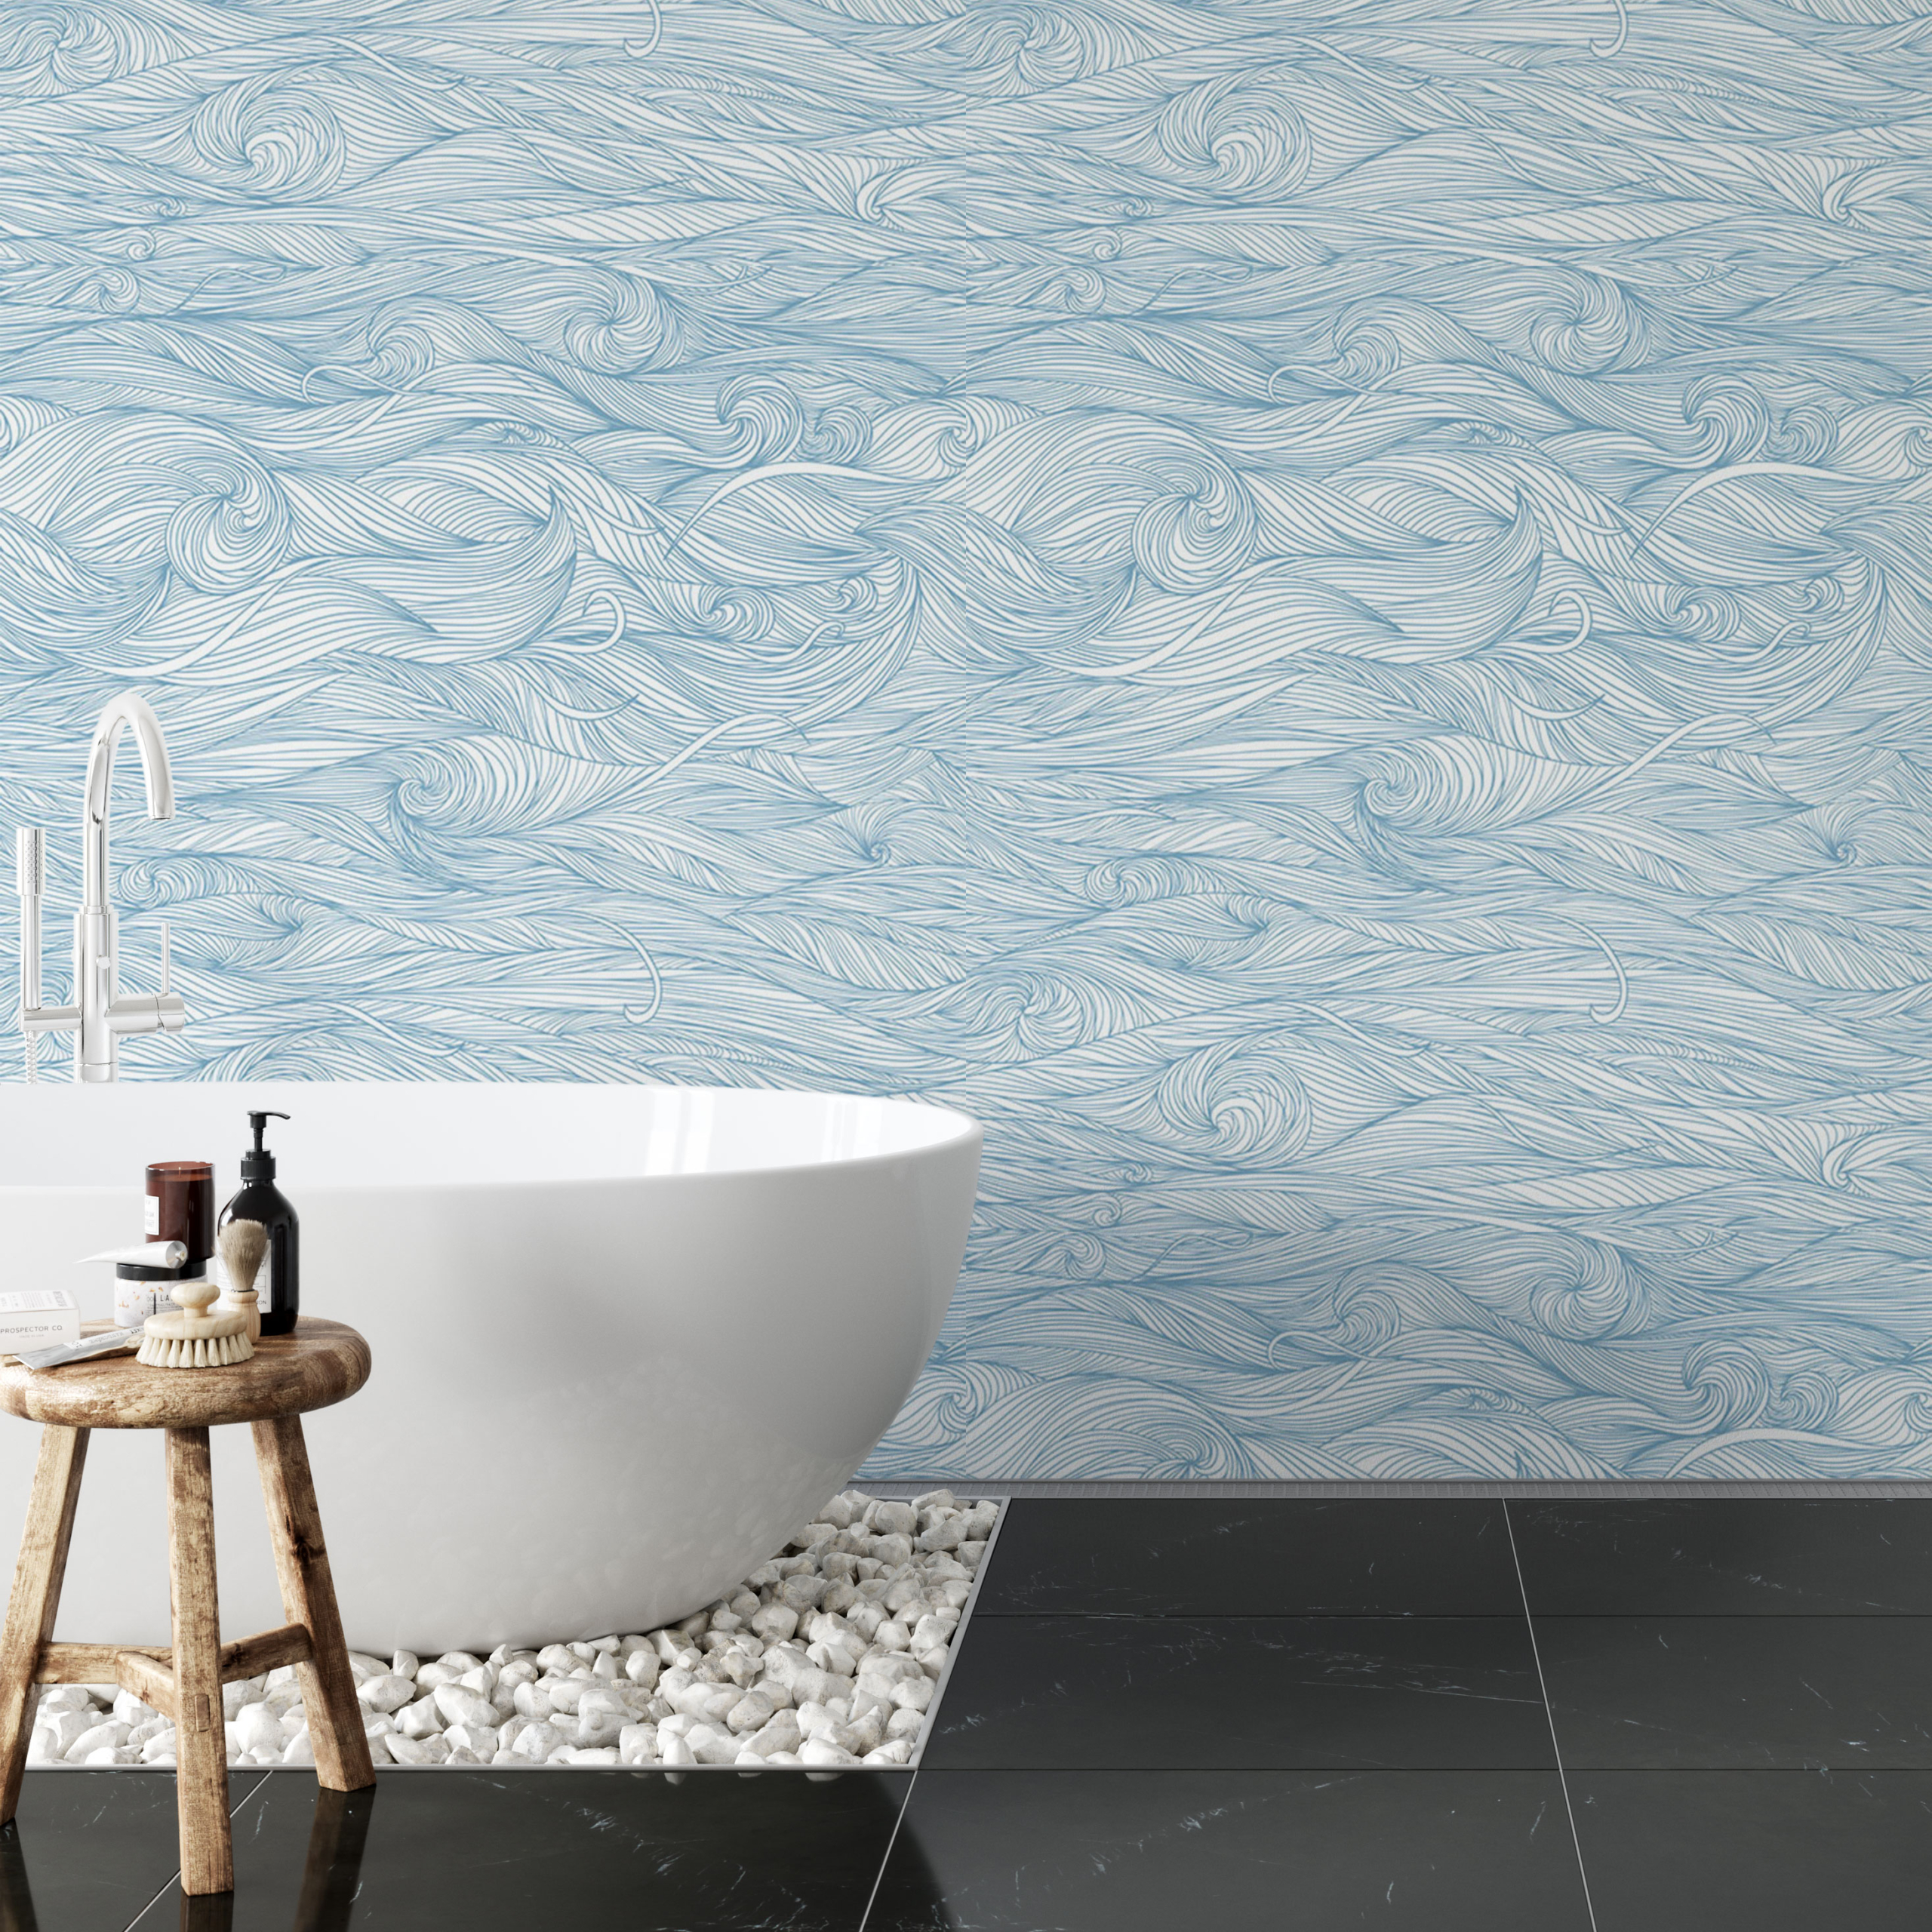 white bathtub in front of blue swirl wallpaper